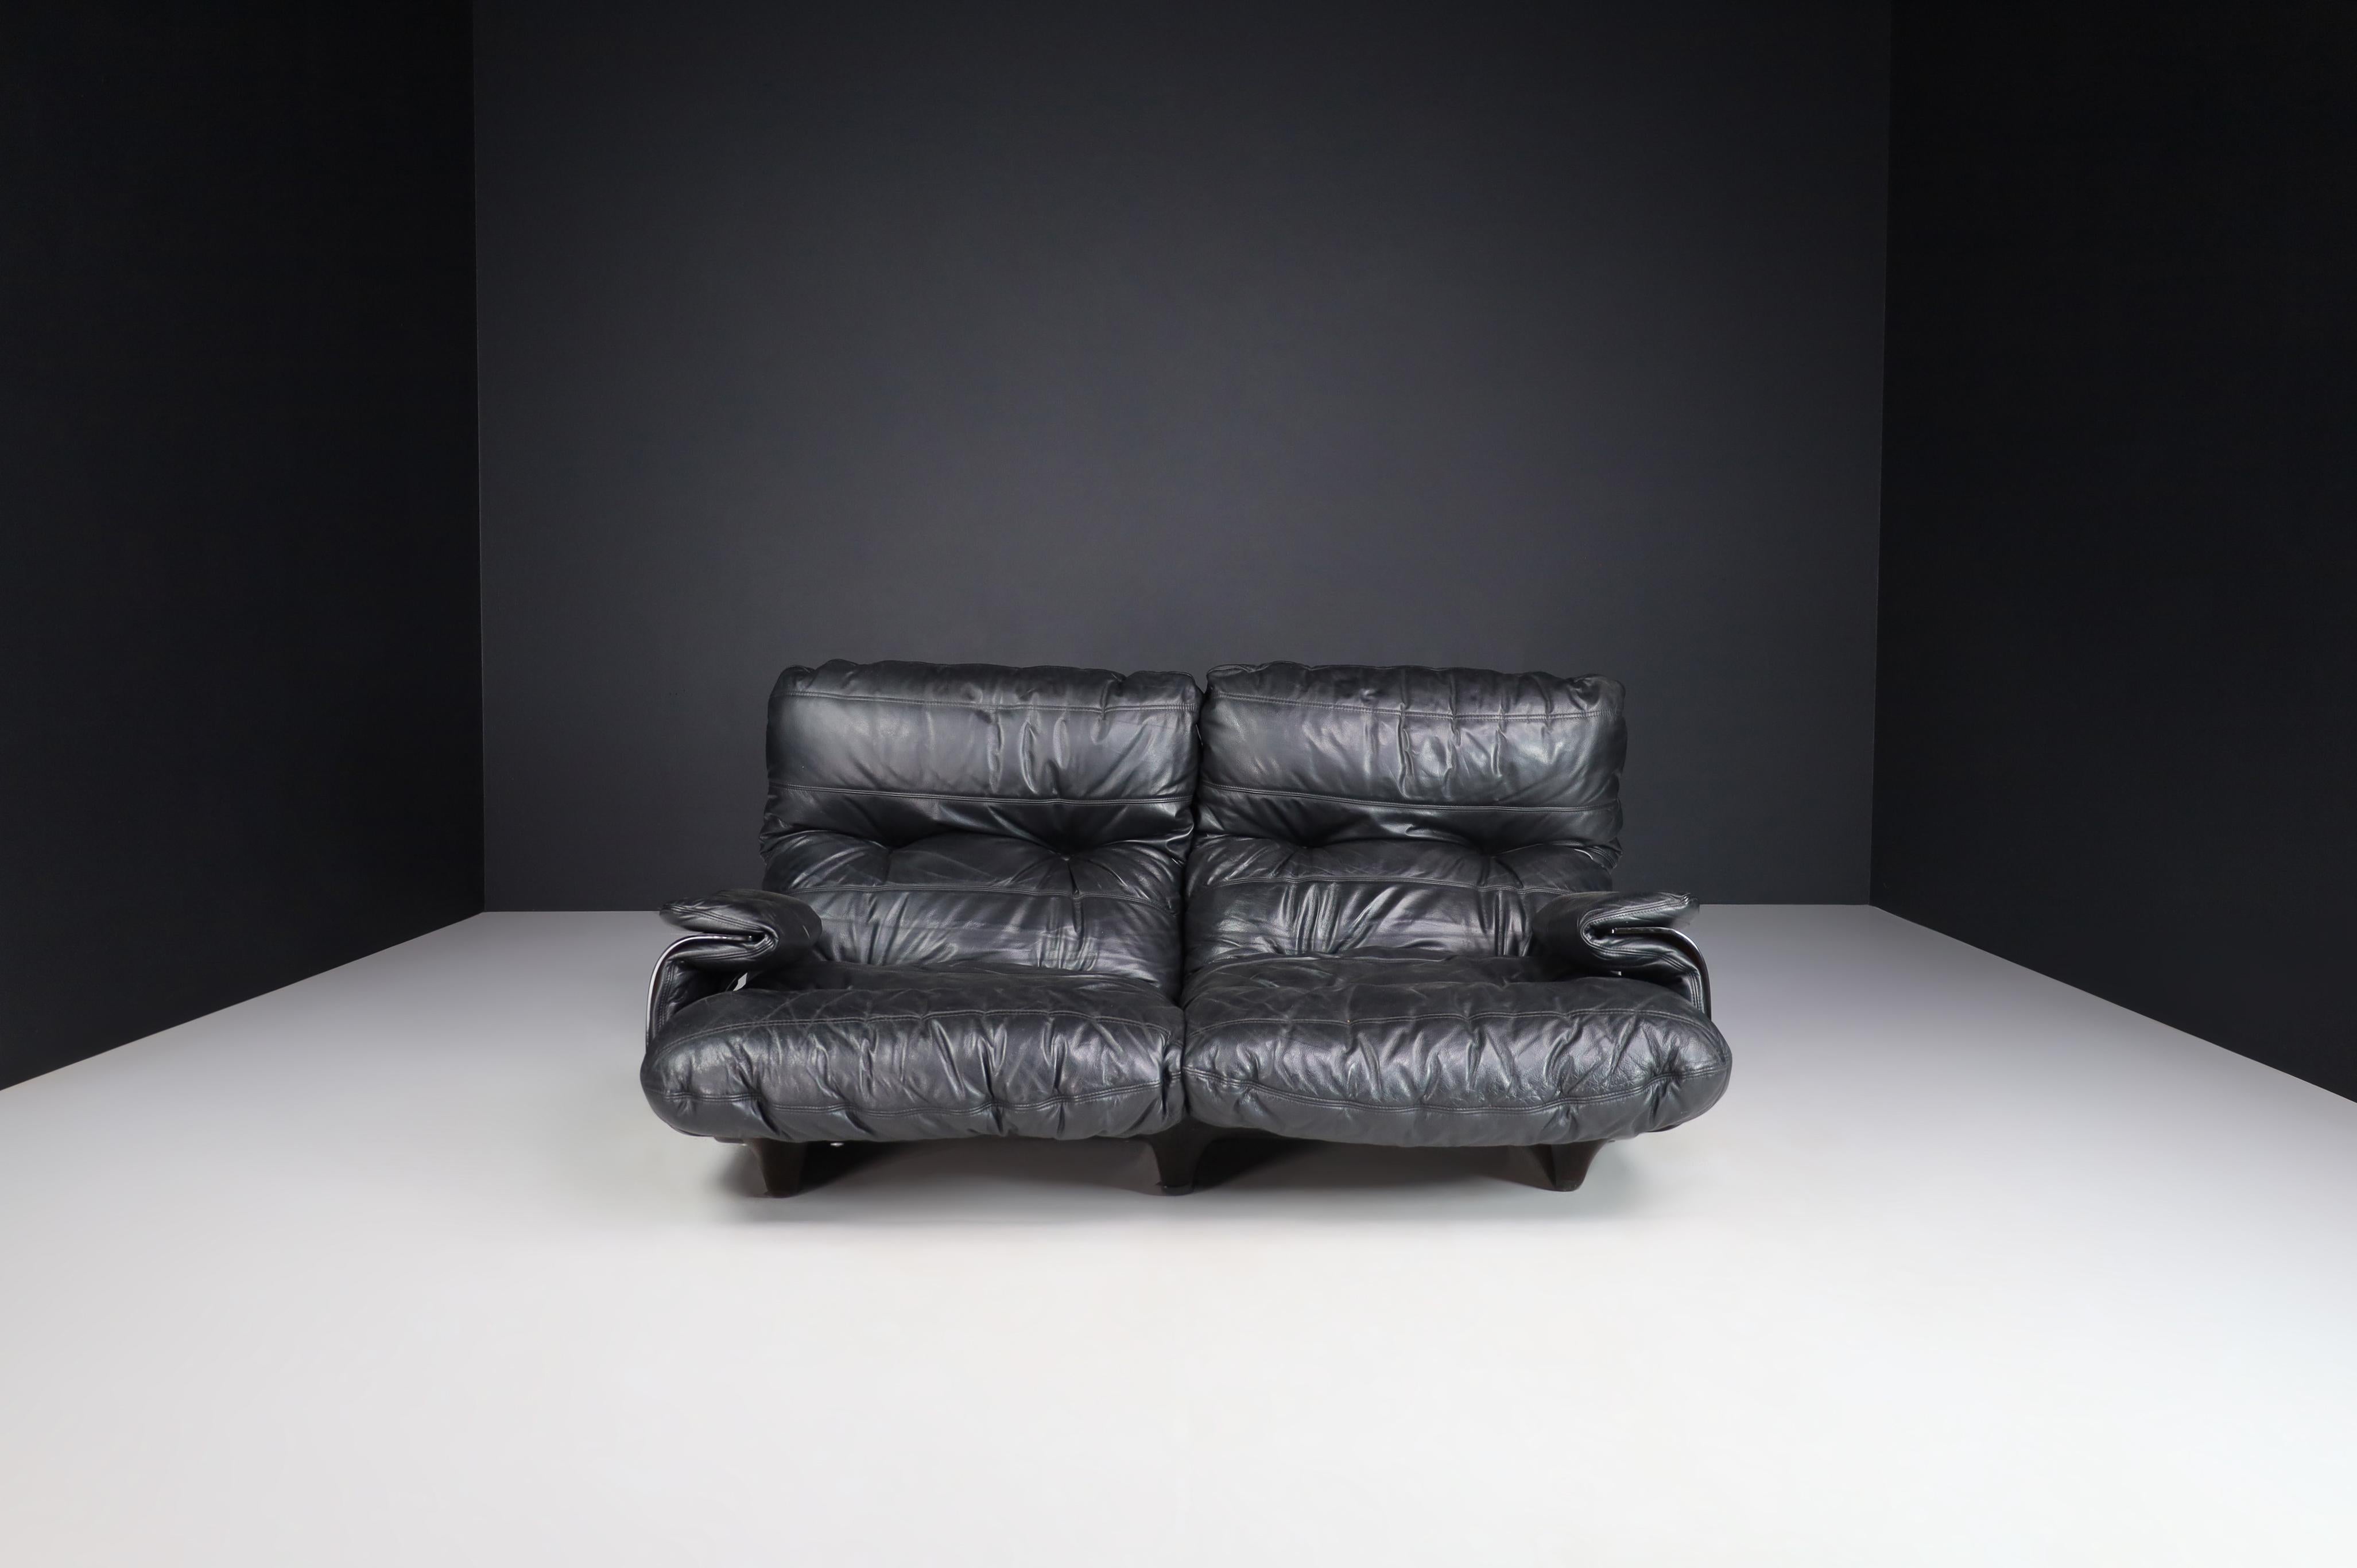 Ligne Roset Marsala Sofa in Black Leather by Michel Ducaroy, France, the 1970s For Sale 1